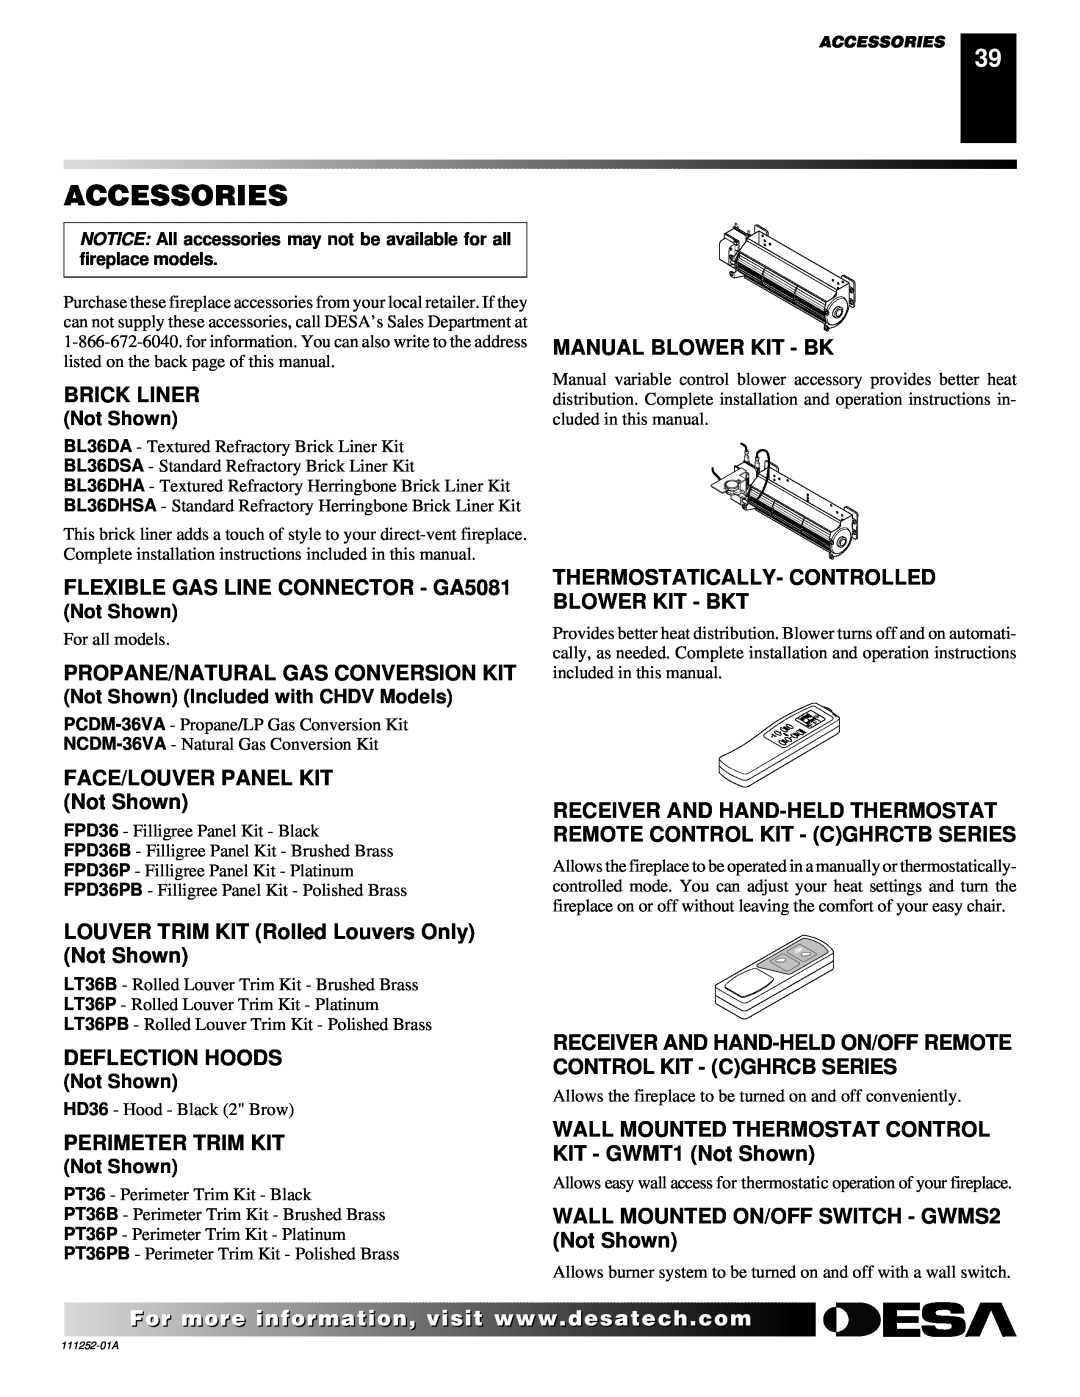 Desa CHDV36NRA Accessories, Brick Liner, FLEXIBLE GAS LINE CONNECTOR - GA5081, Propane/Natural Gas Conversion Kit 